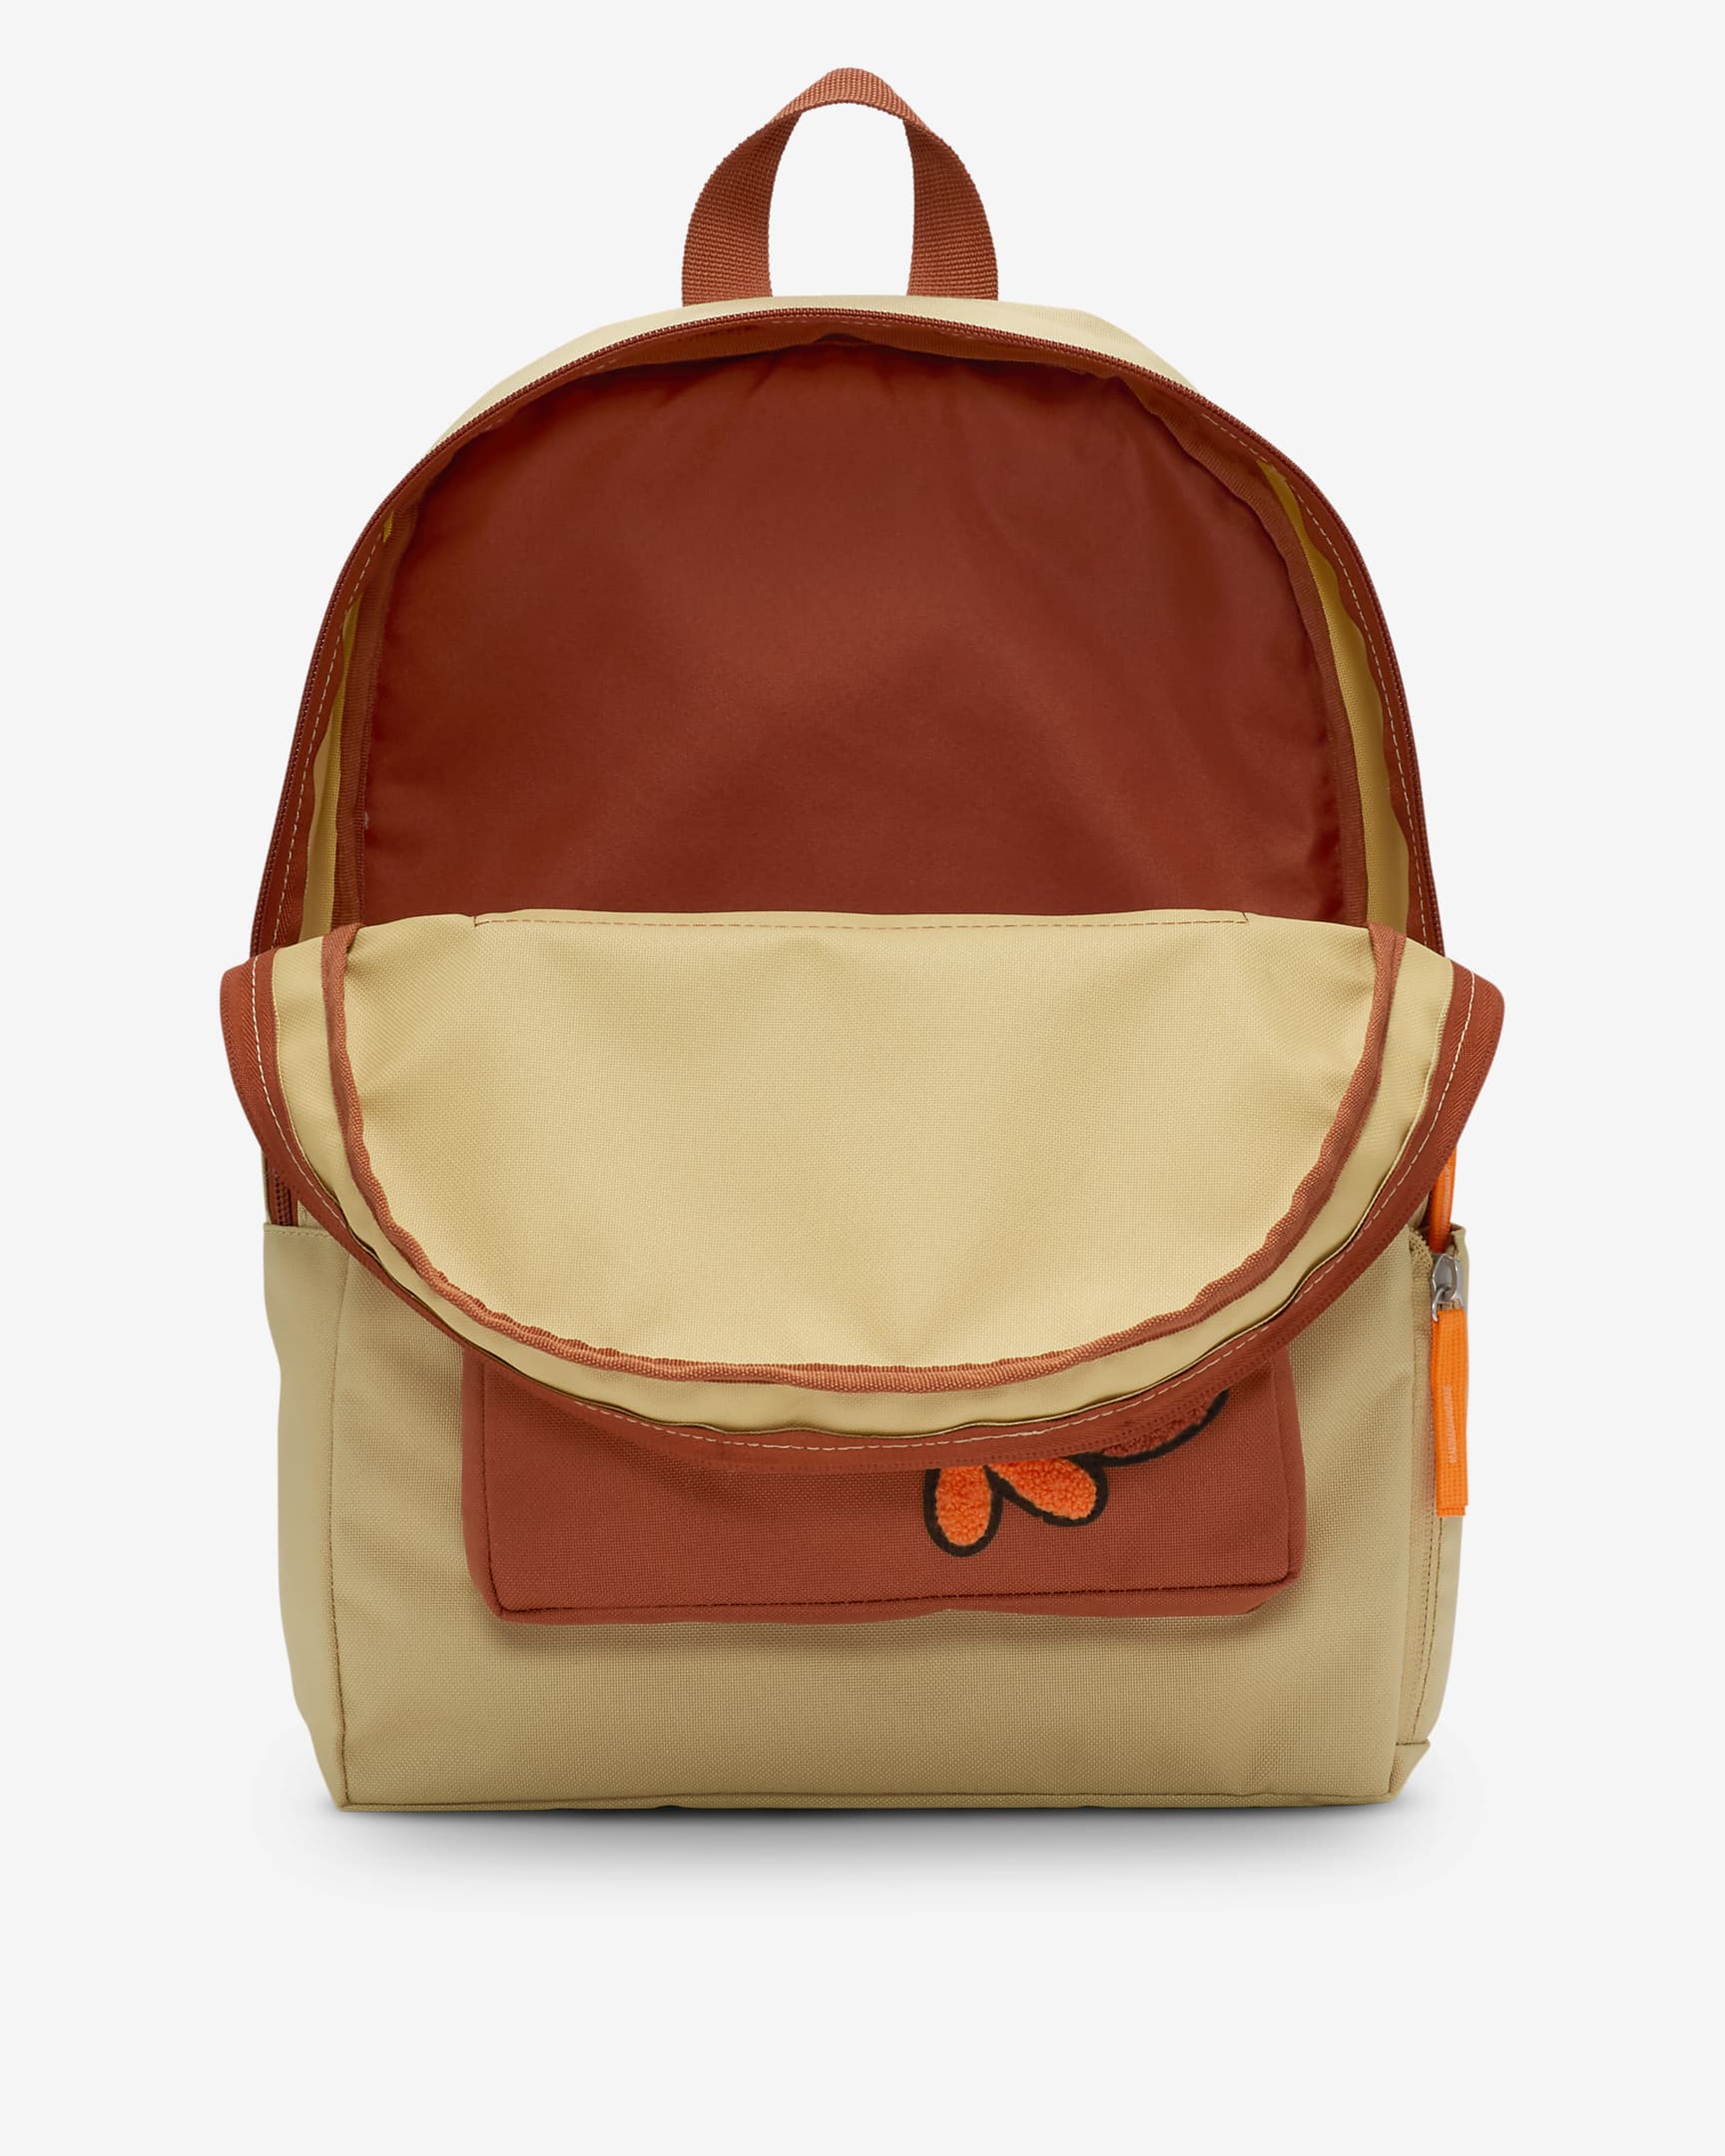 Nike Classic Kids' Backpack (16L) - Sesame/Burnt Sunrise/Total Orange